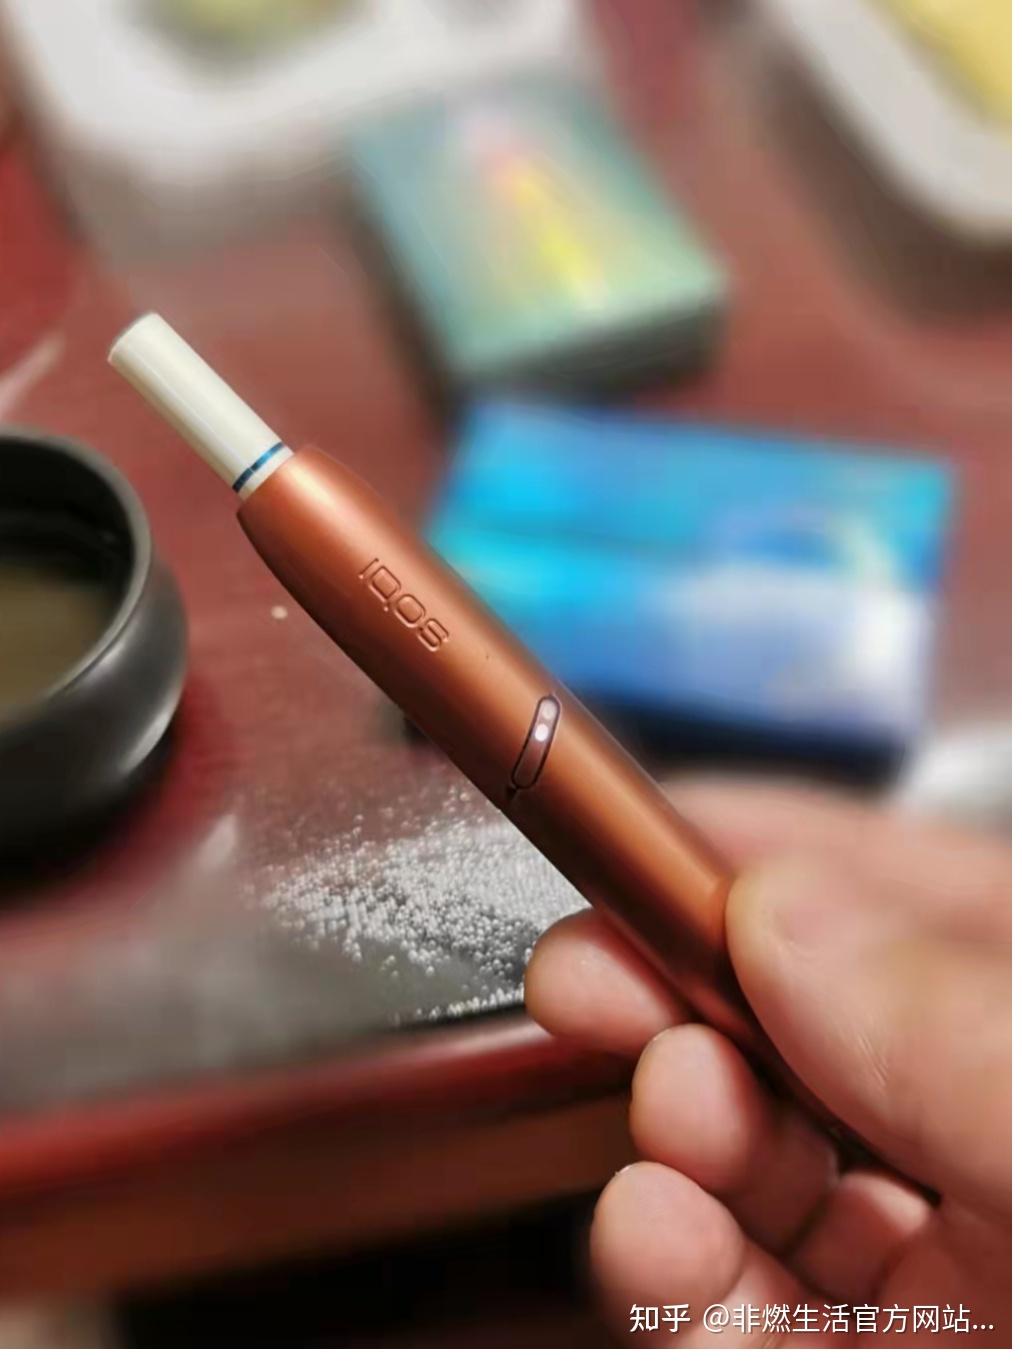 iqos电子烟对人体的危害程度和香烟其他类型电子烟比较如何